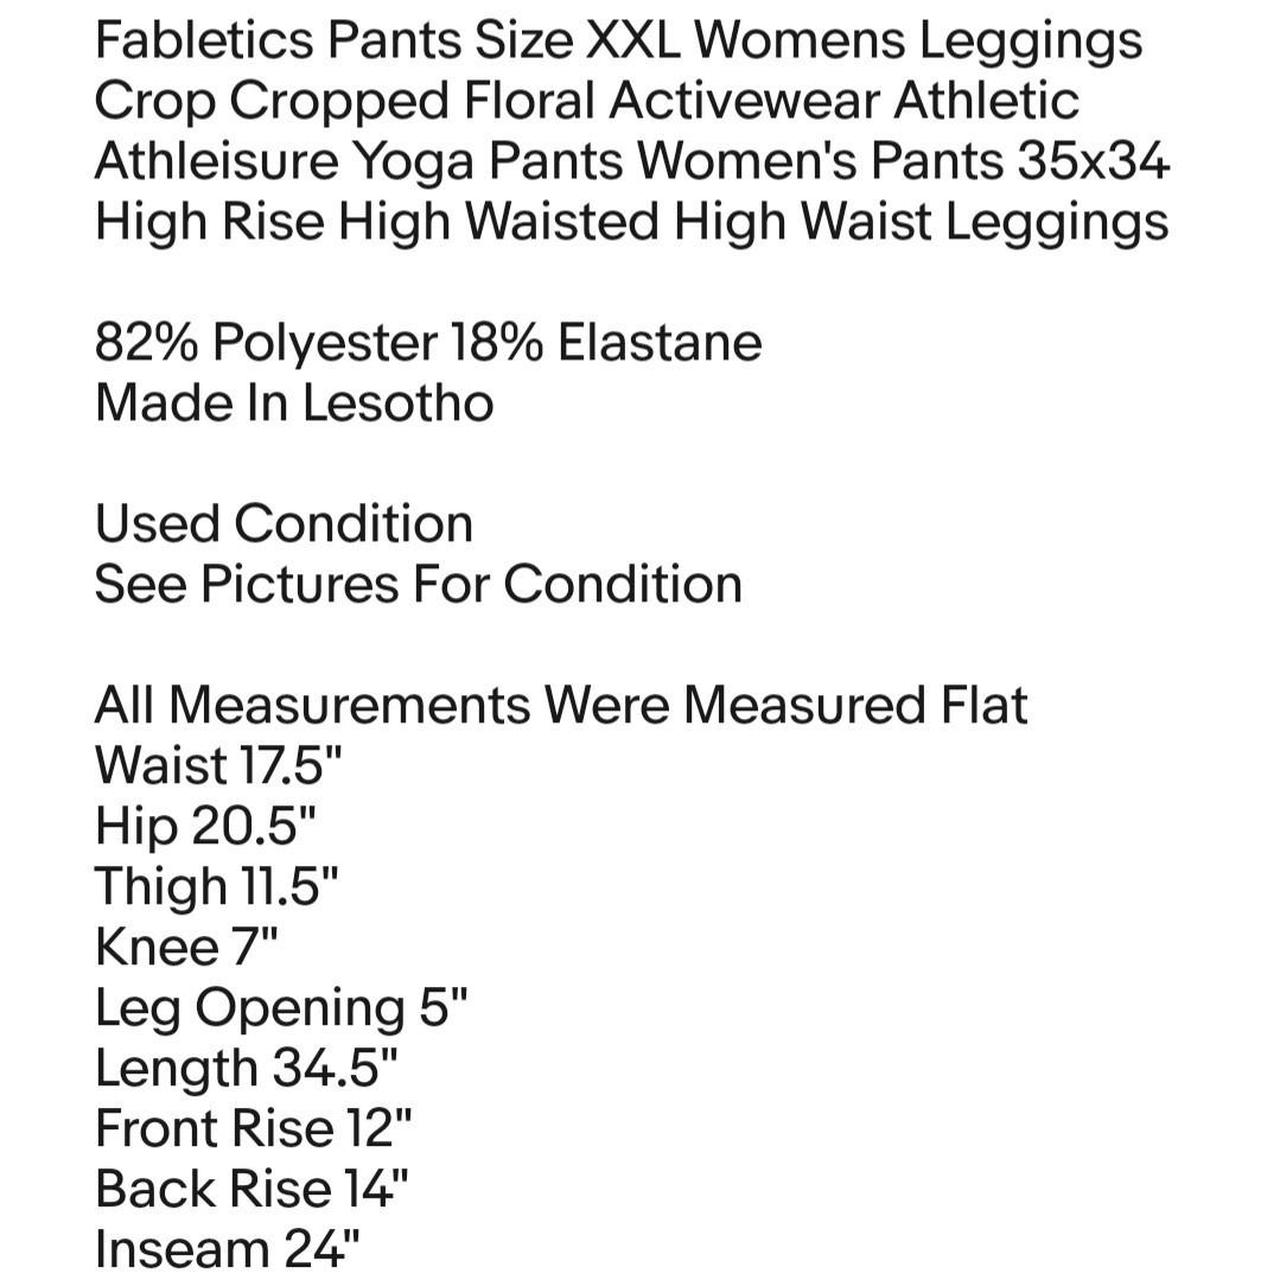 Fabletics Pants Size XXL Womens Leggings Crop - Depop